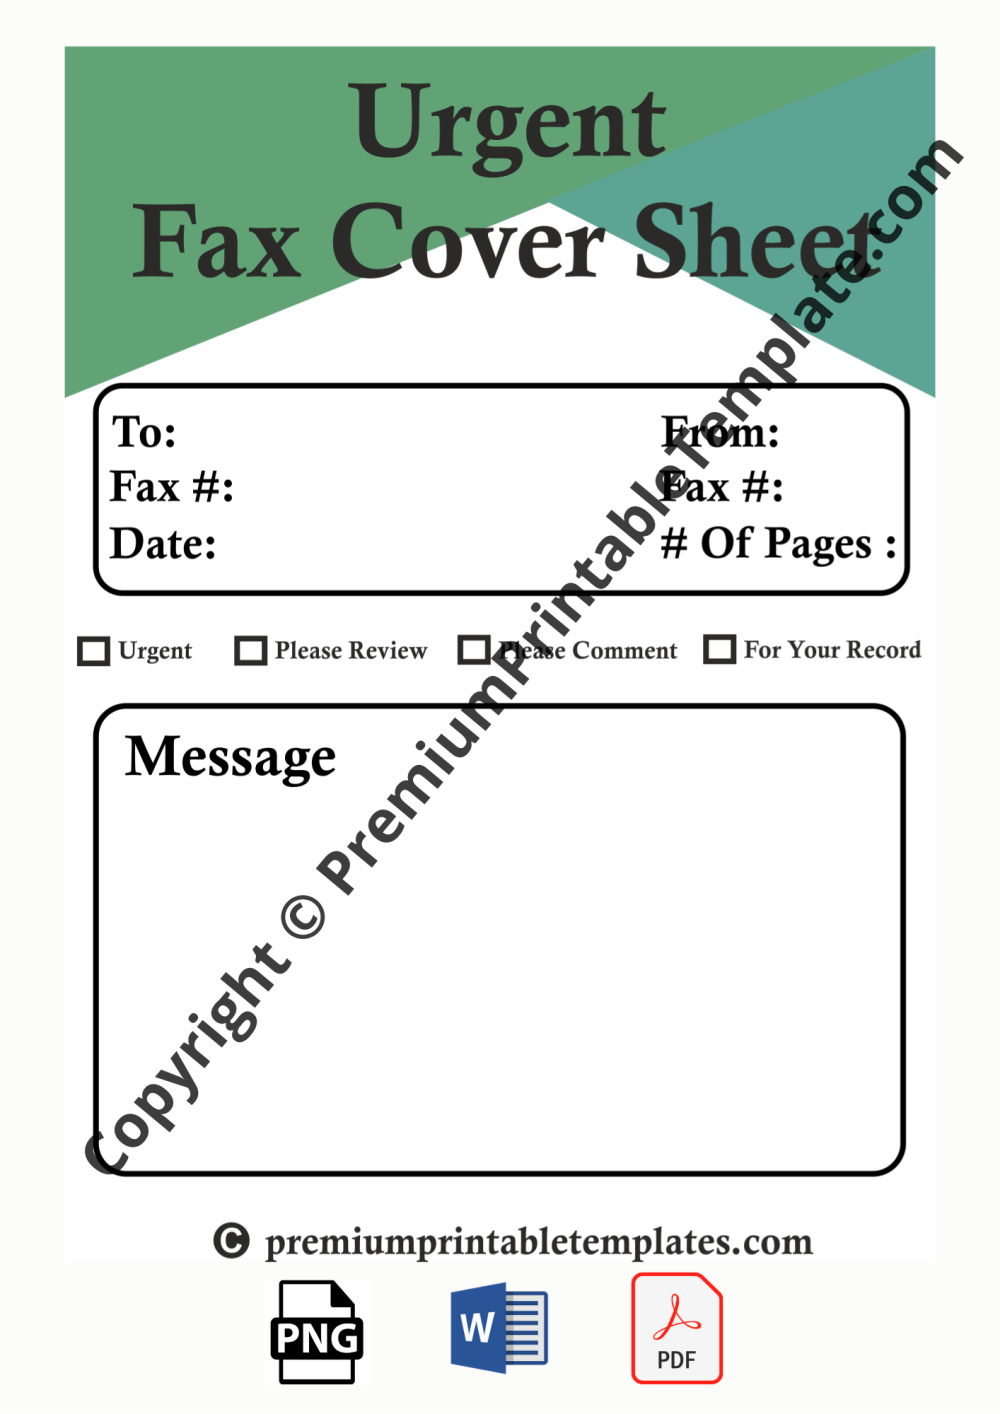 urgent fax cover sheet